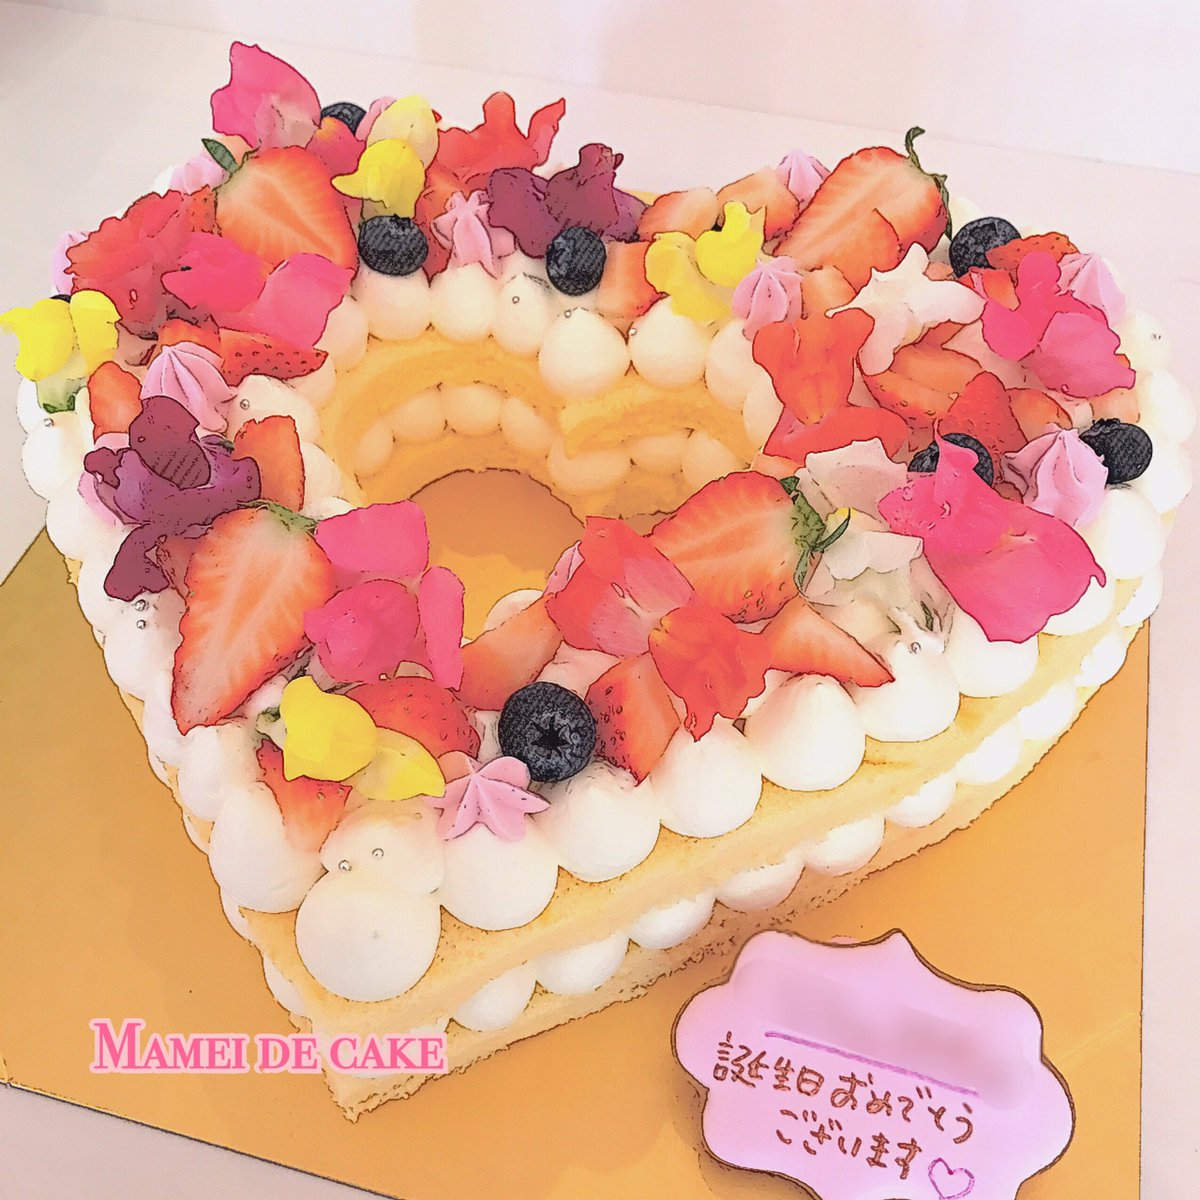 Mamei De Cake マーメイドケーキ Ar Twitter ケーキ オーダーケーキ オリジナルケーキ オーダーメイド フラワーケーキ エディブルフラワー 苺 花 誕生日ケーキ バースデーケーキ お誕生日おめでとう ハッピーバースデー ハート ピンク